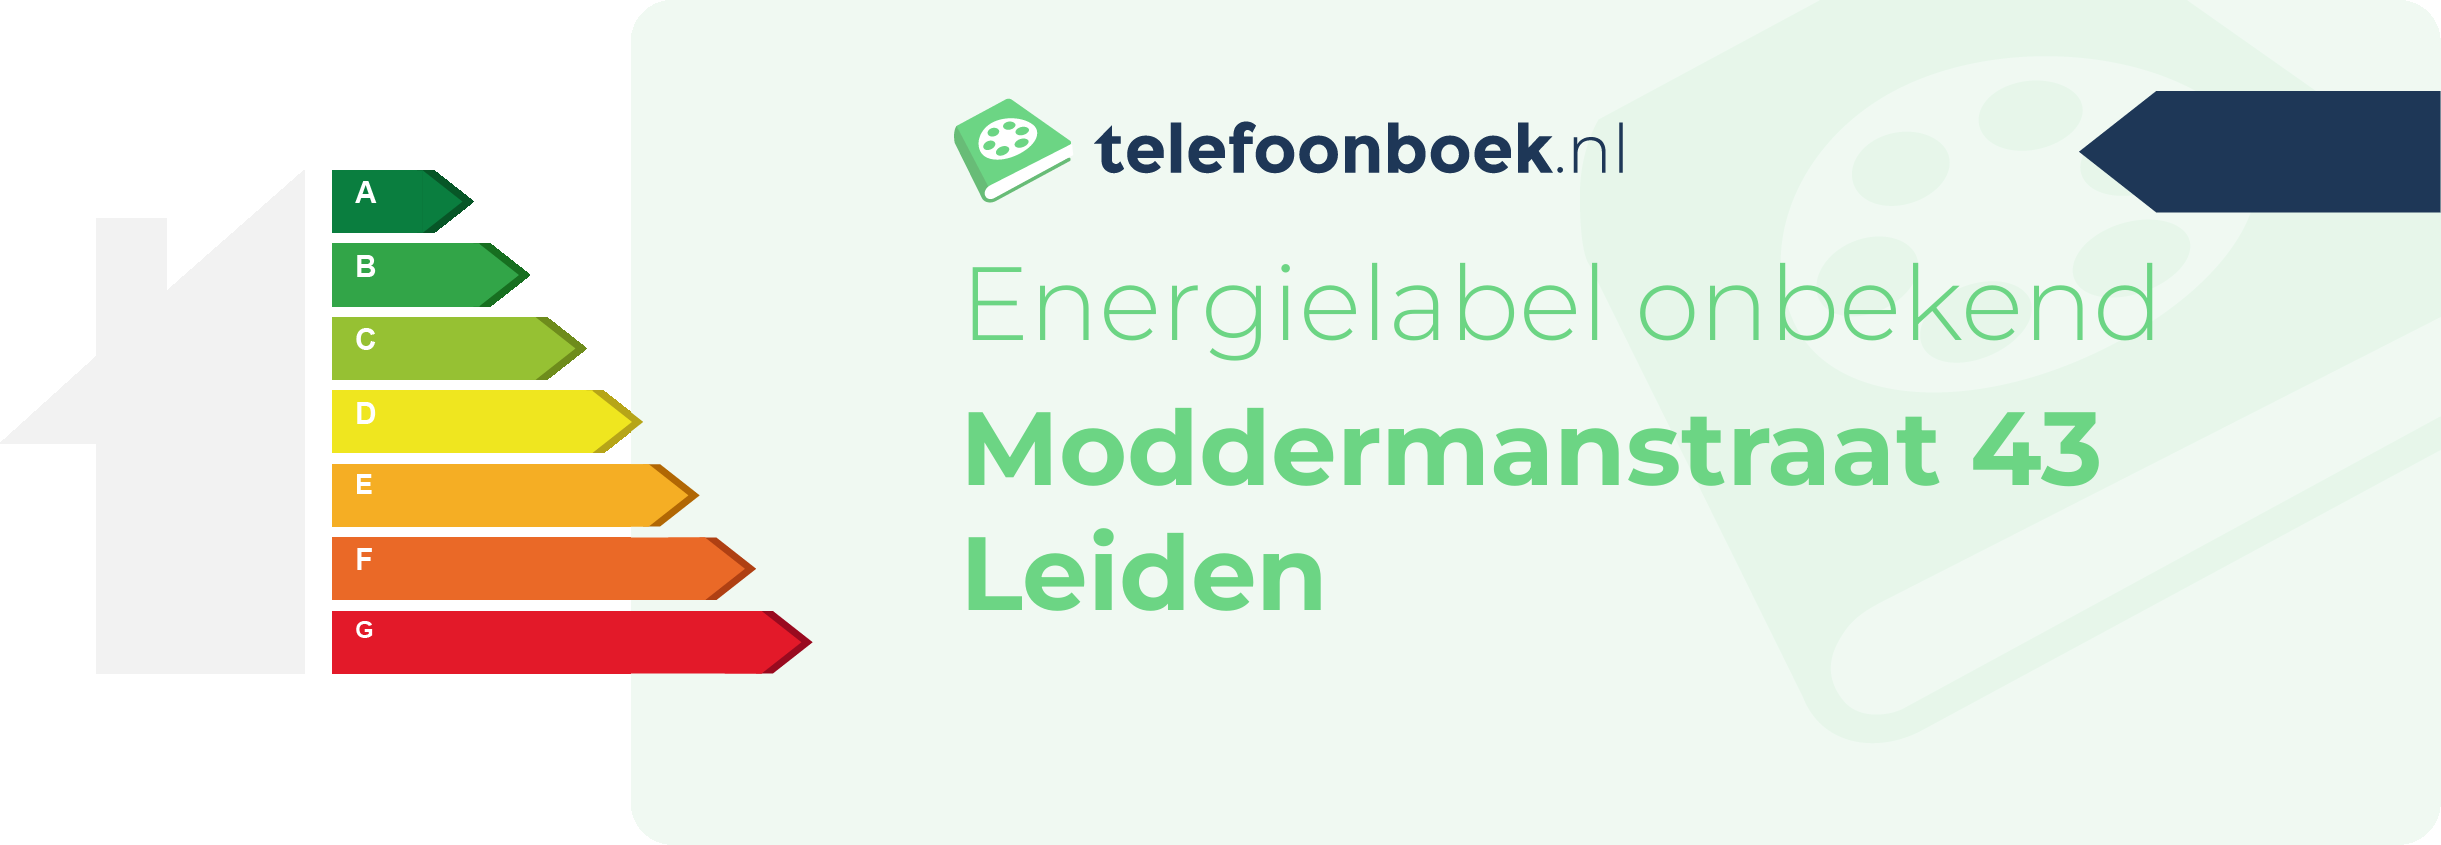 Energielabel Moddermanstraat 43 Leiden